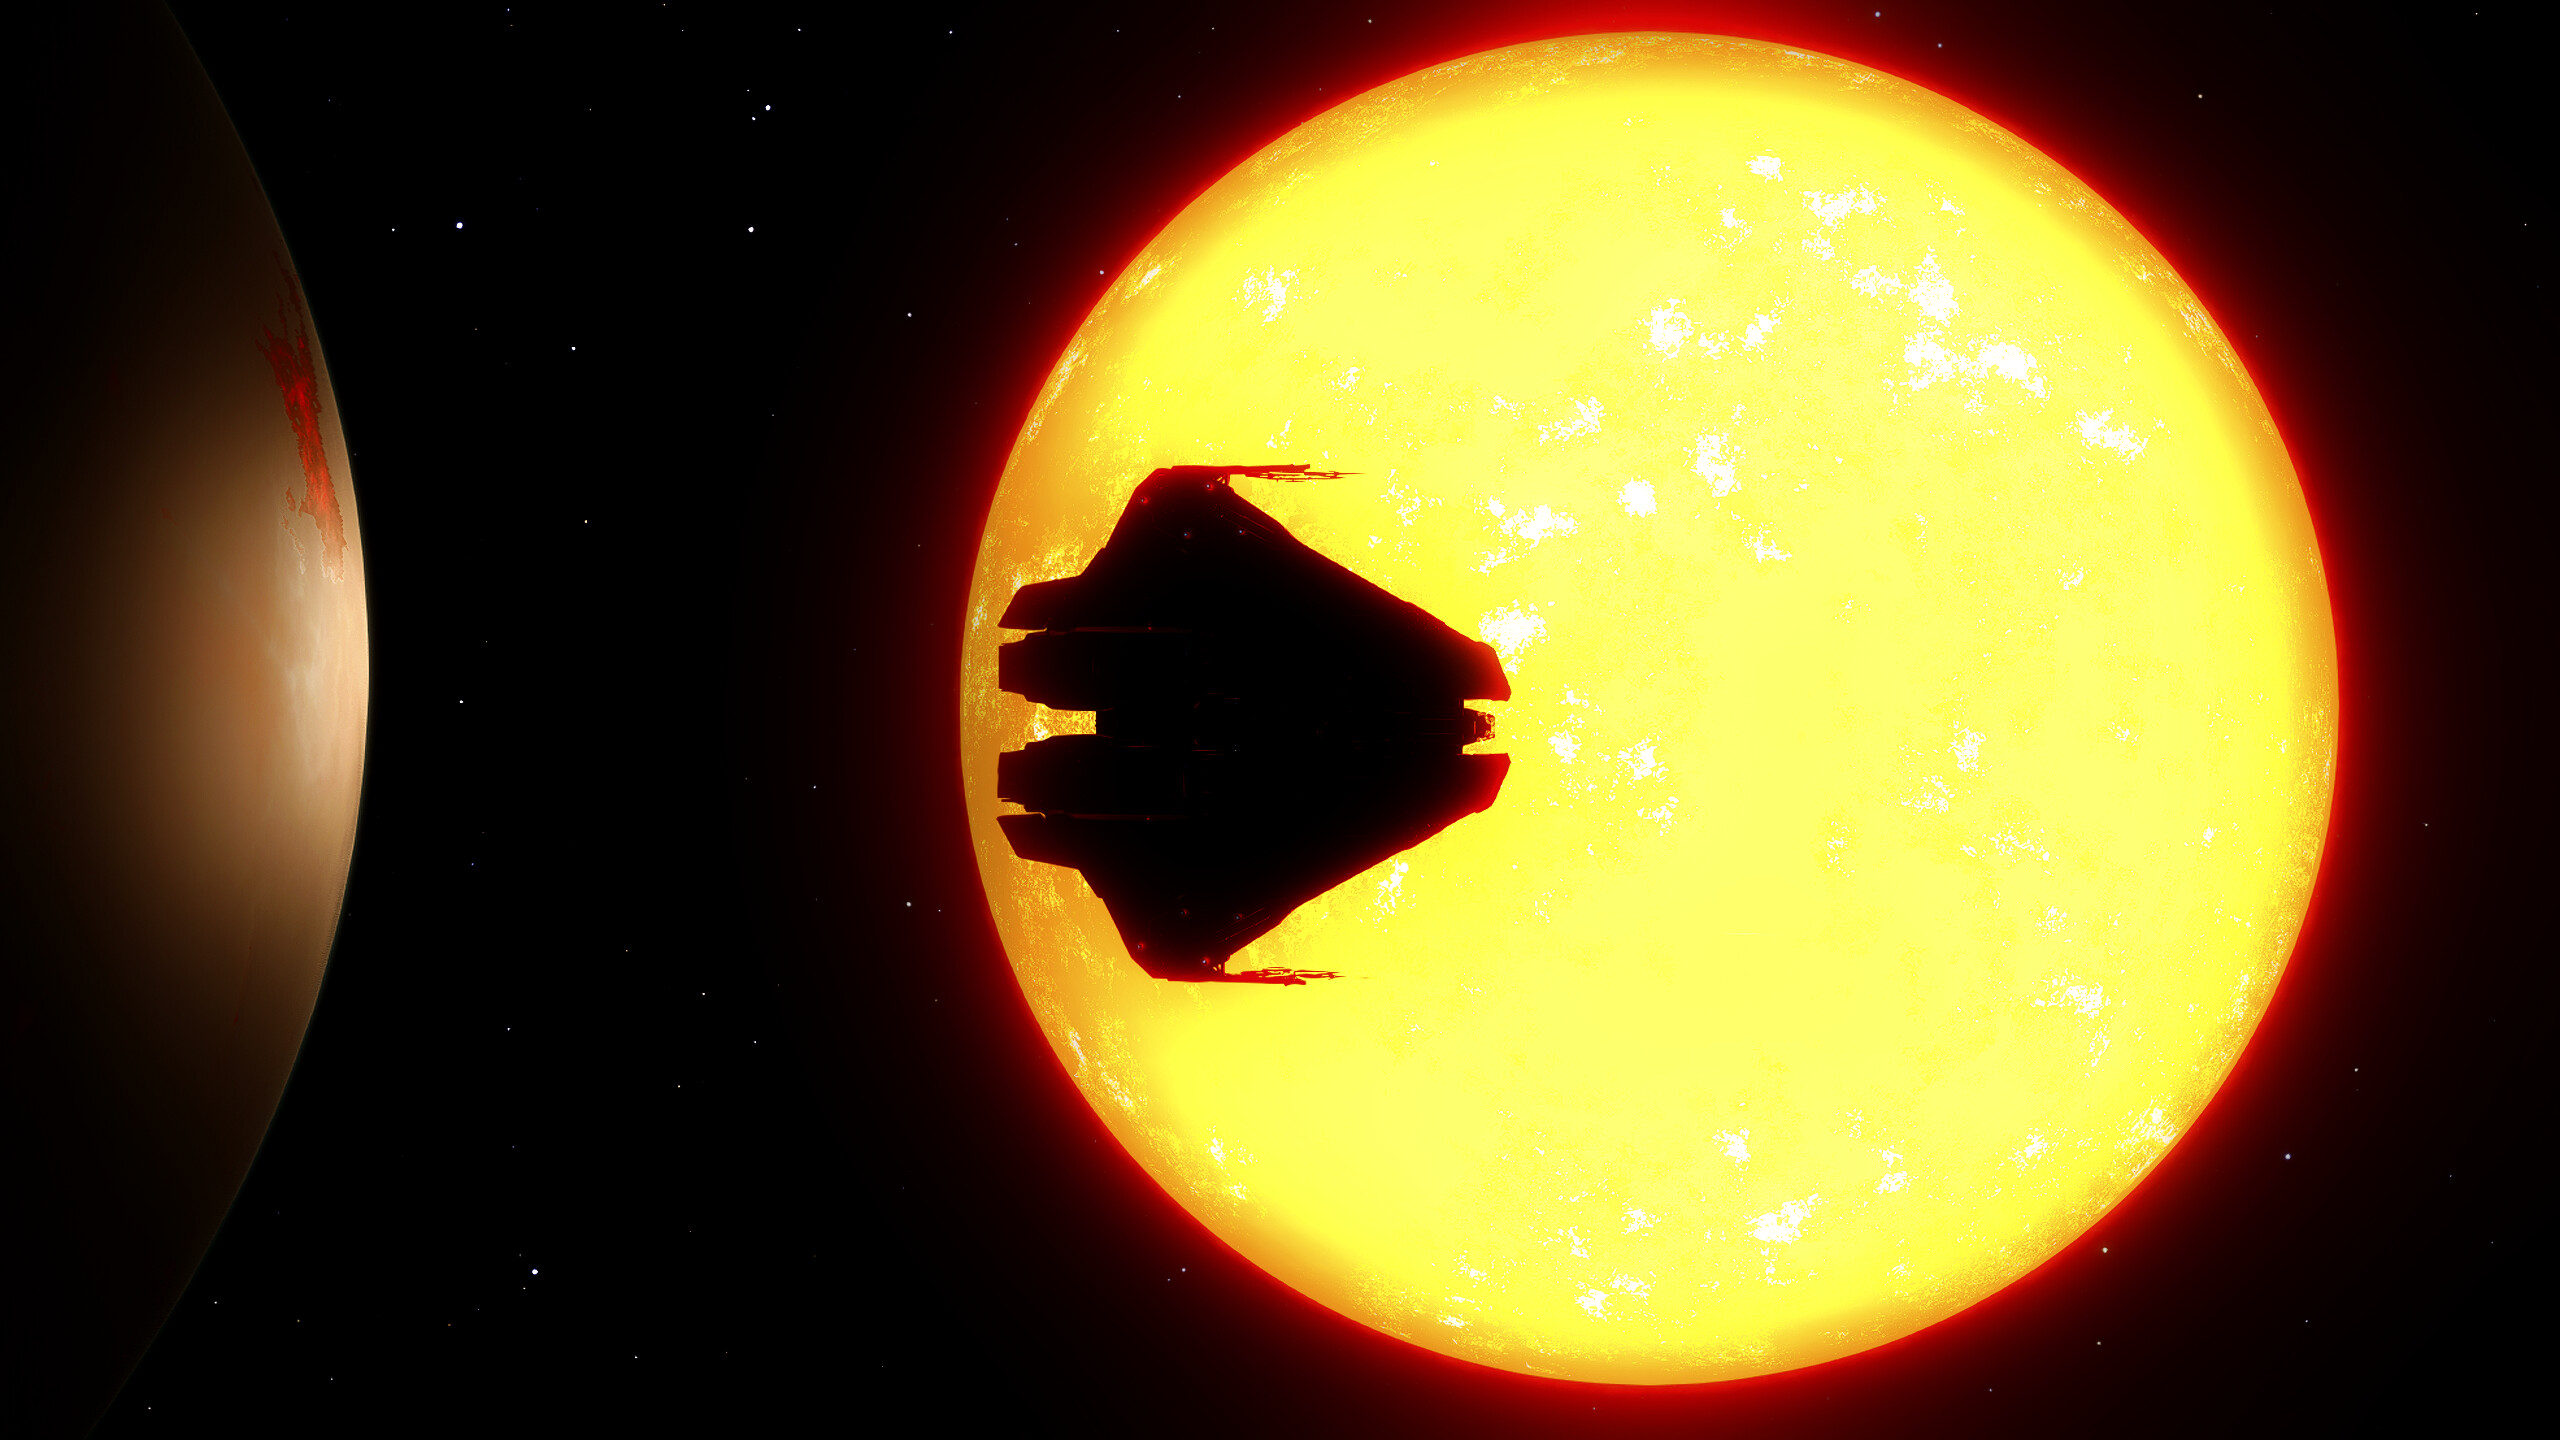 Red Supergiant, Antares